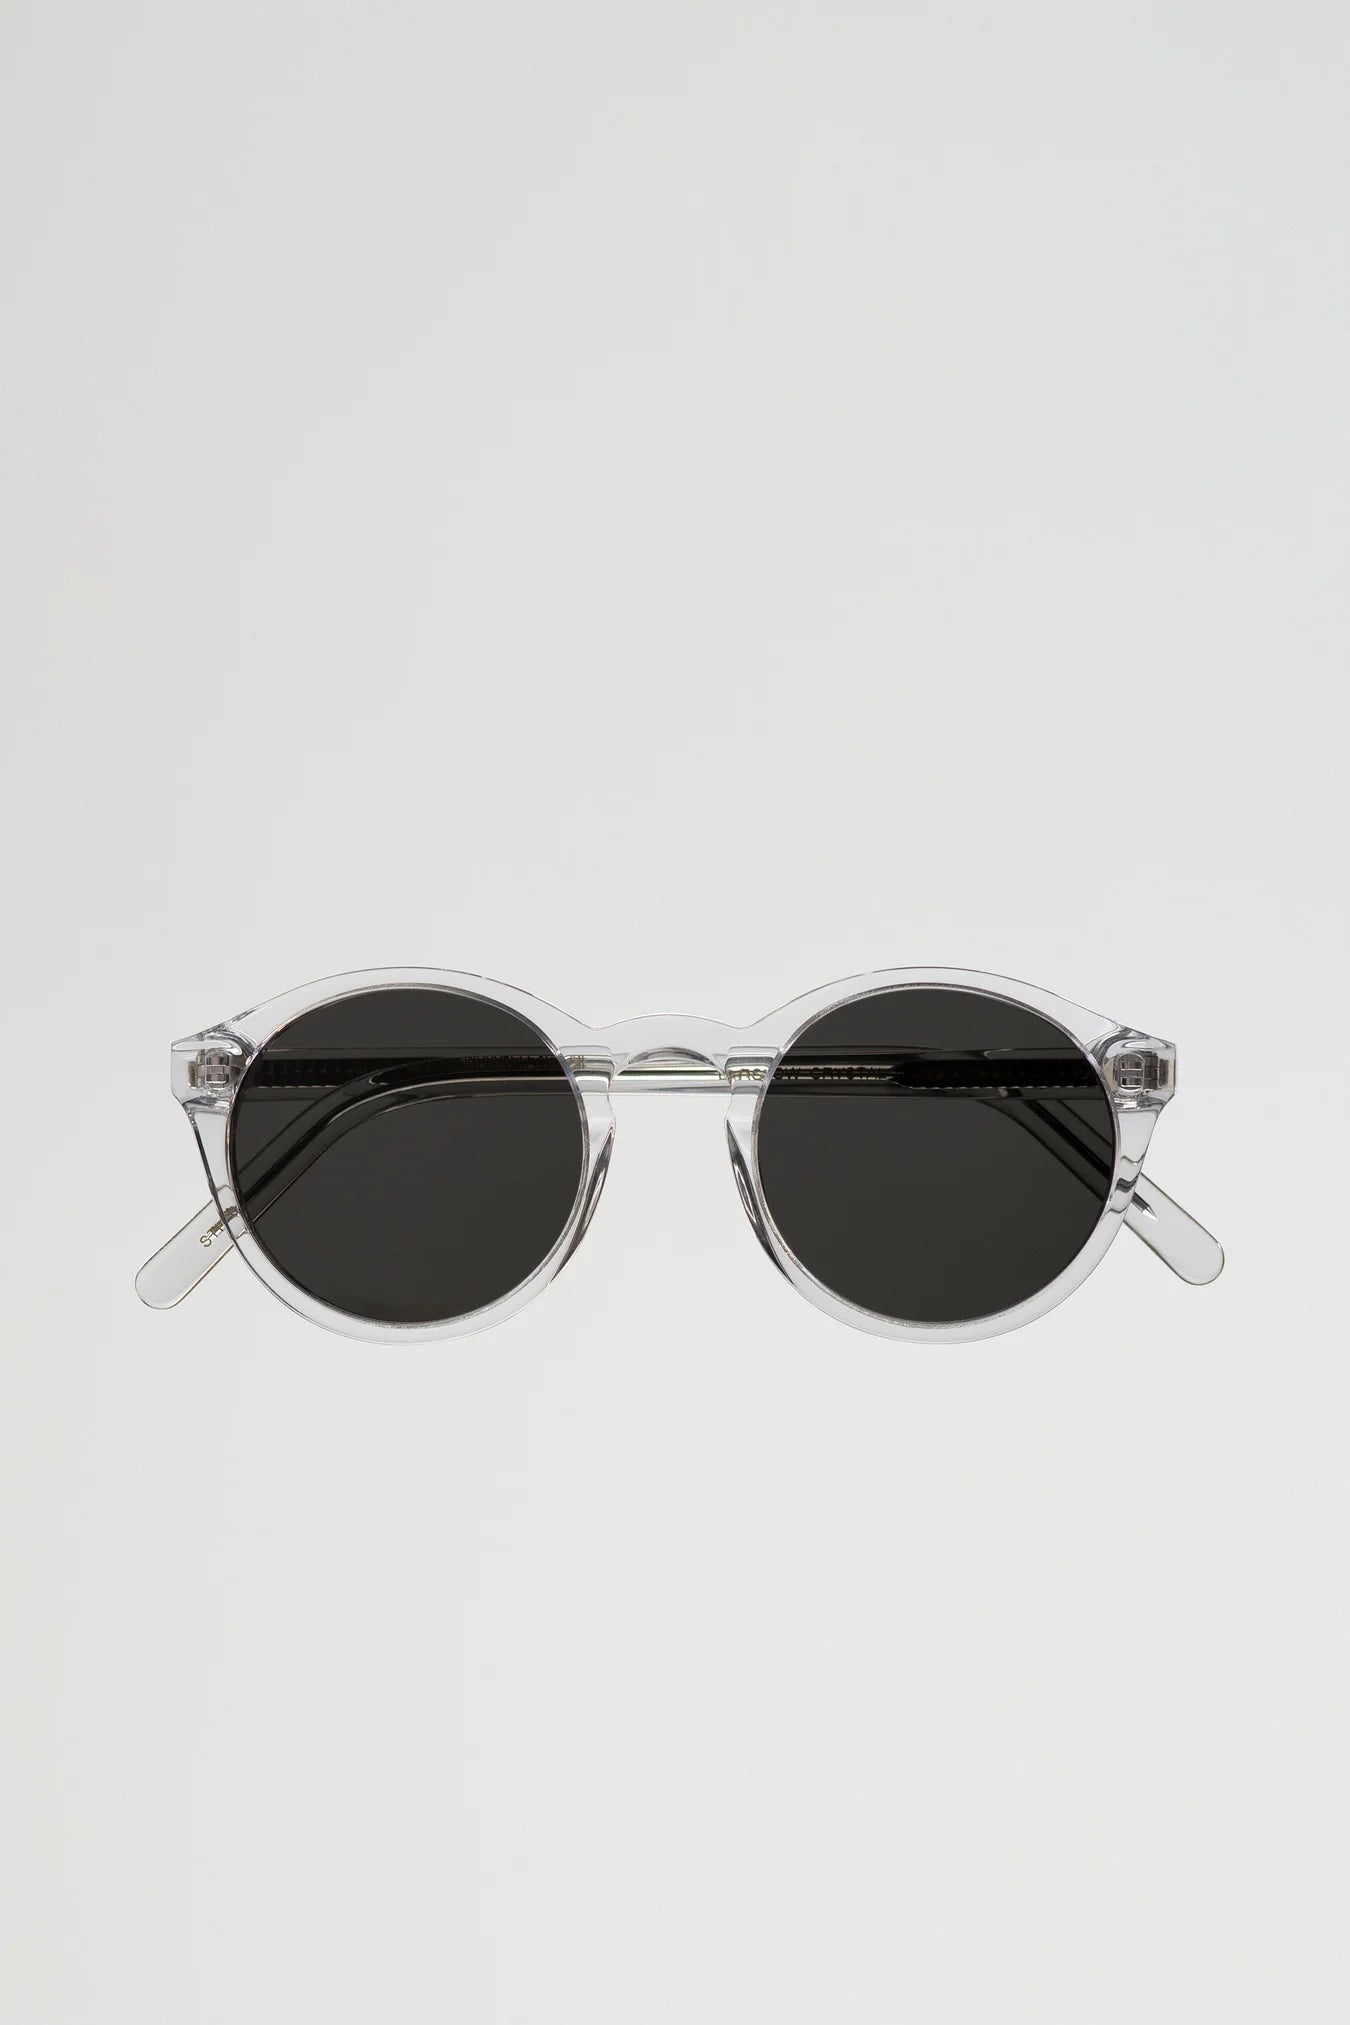 Monokel Eyewear Barstow Crystal Unisex Adult Sunglasses